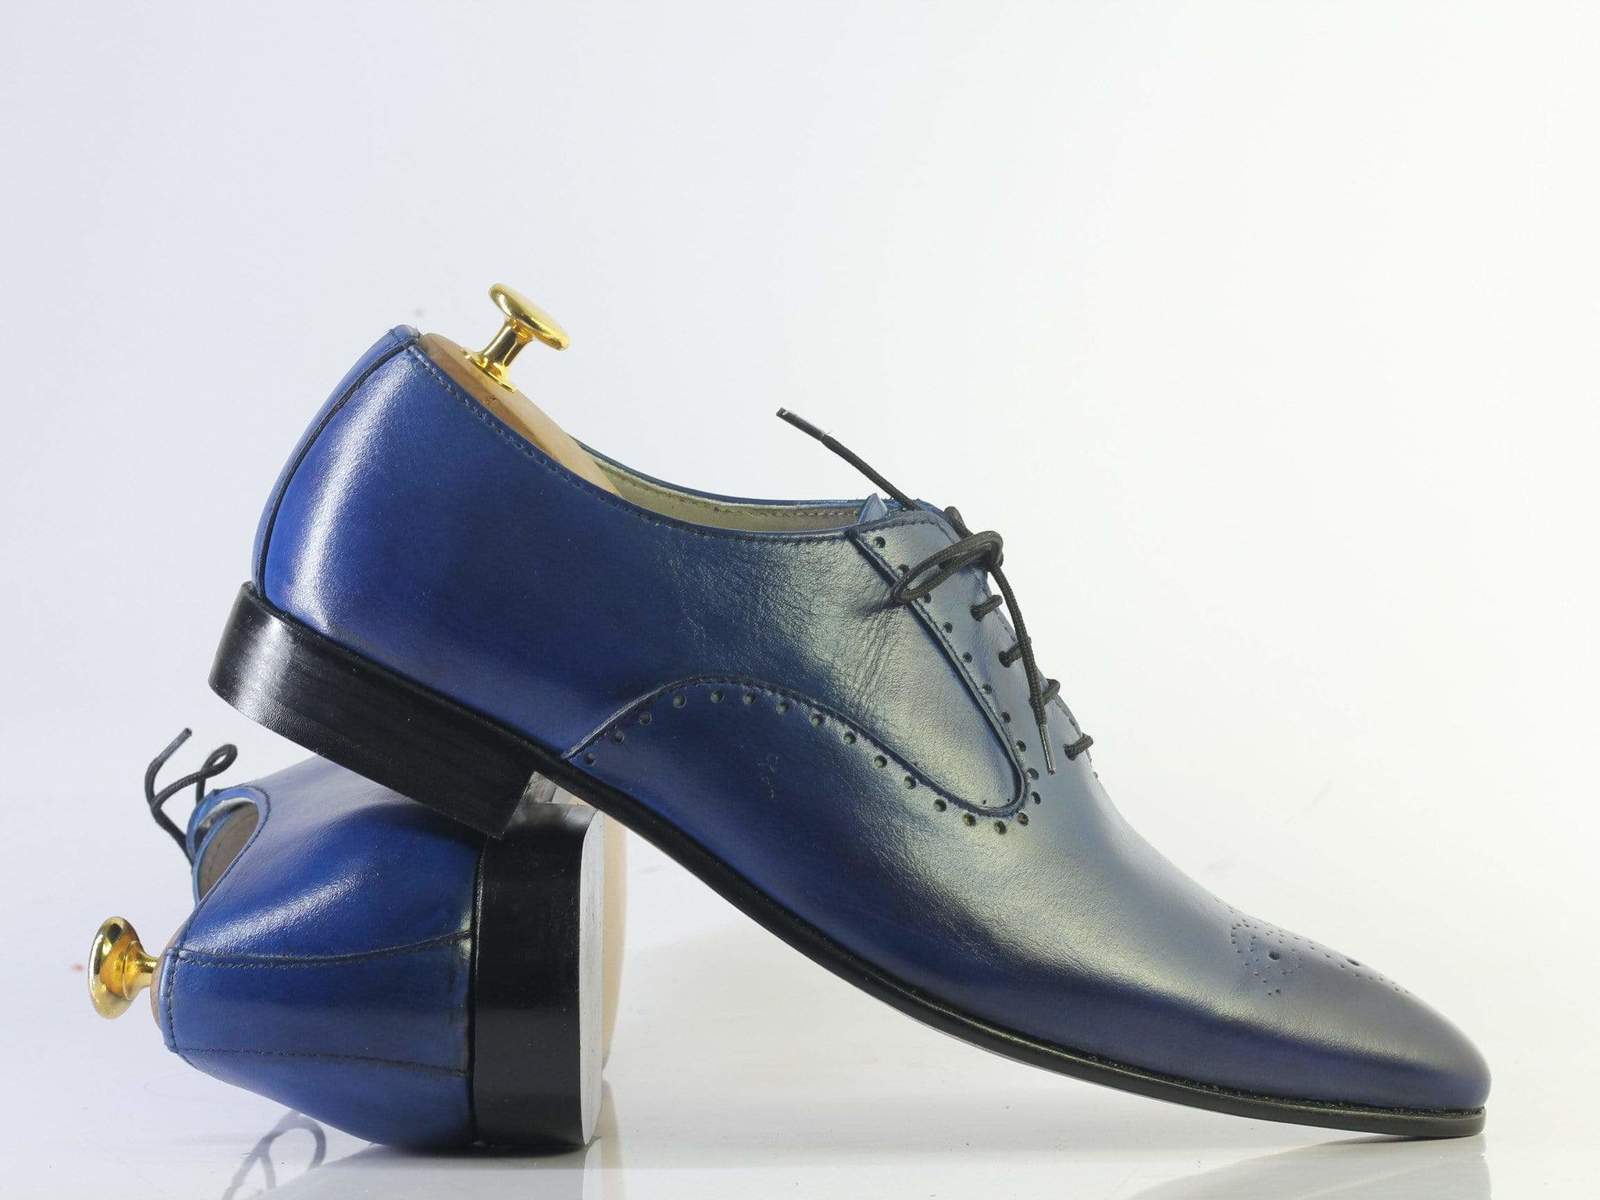 Bespoke Blue Brogue Toe Leather Shoes For Men's - Dress/Formal